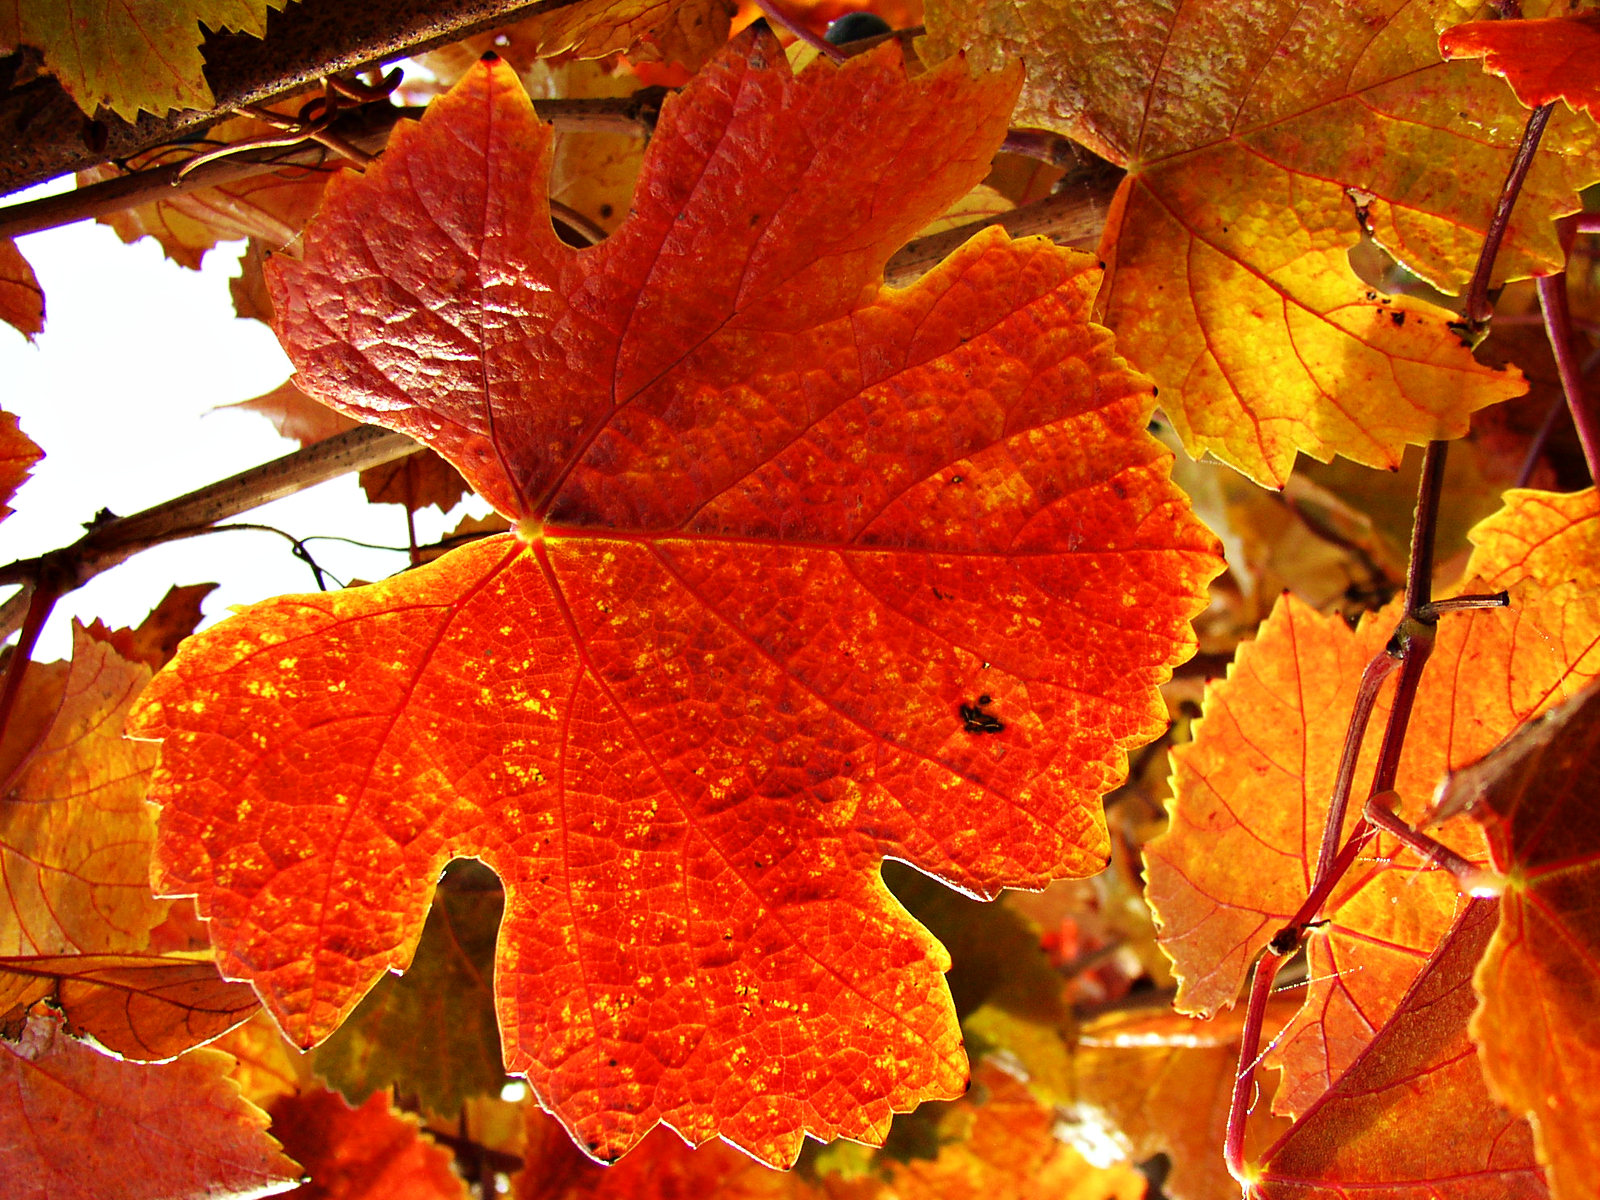 Vineyard Autumn Leaves Wallpaper Tea Party Basics The Long